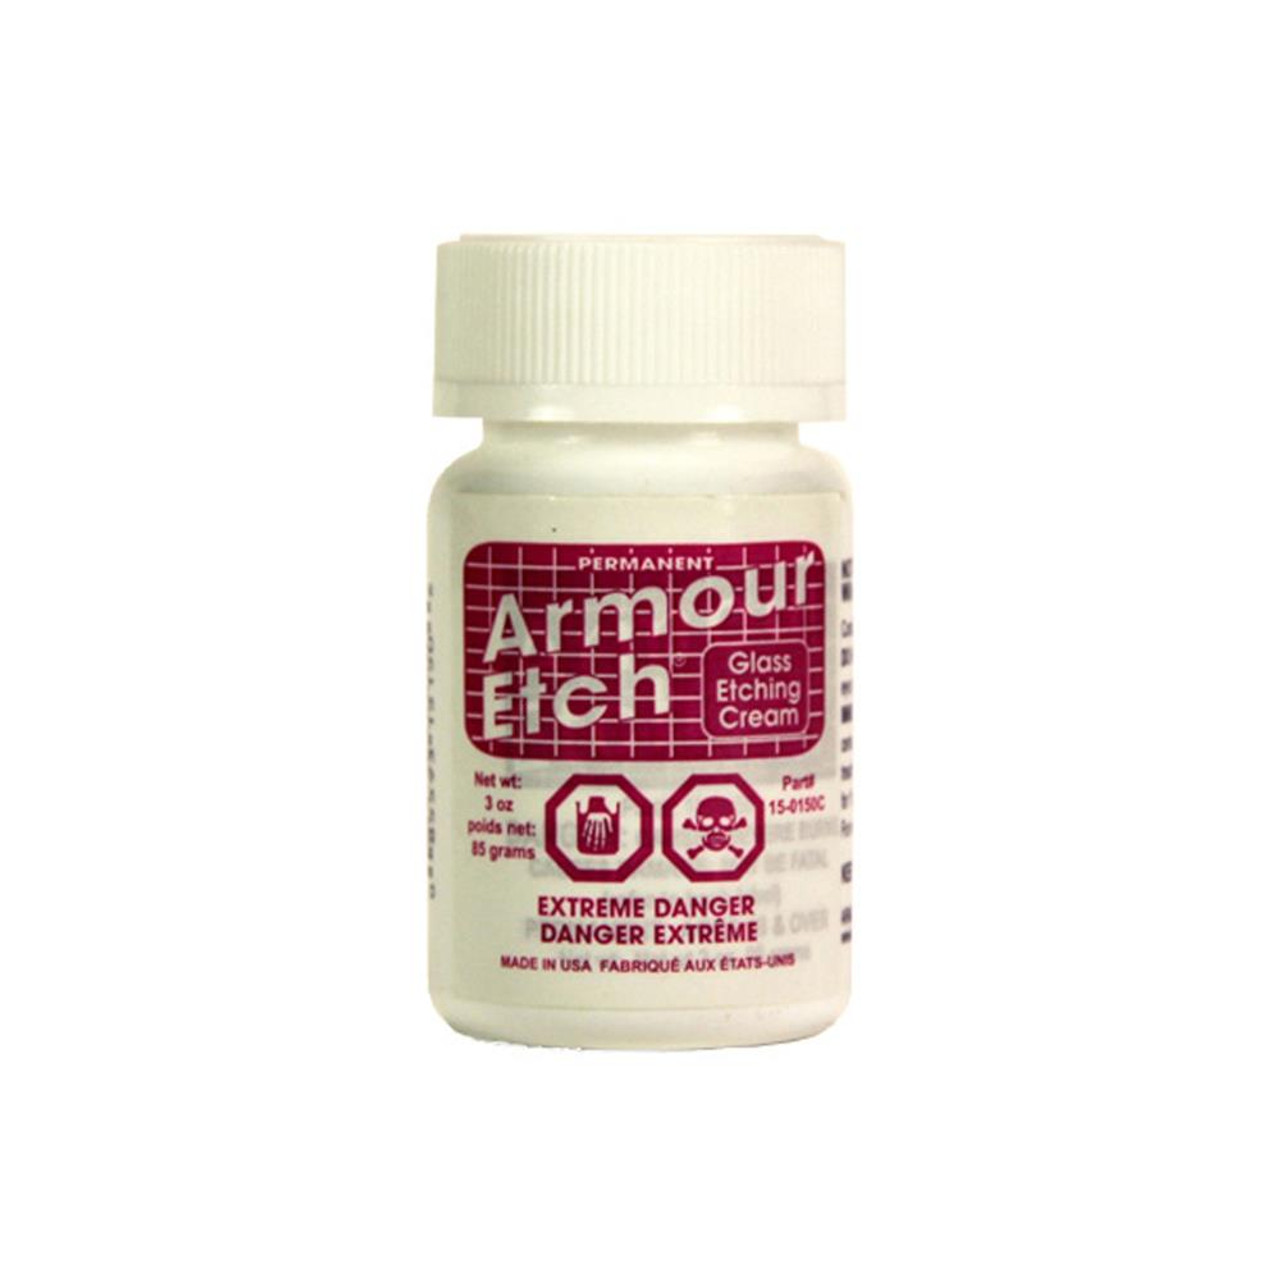 Armour Etch 2.8 Oz Etch Cream (2 Pack)